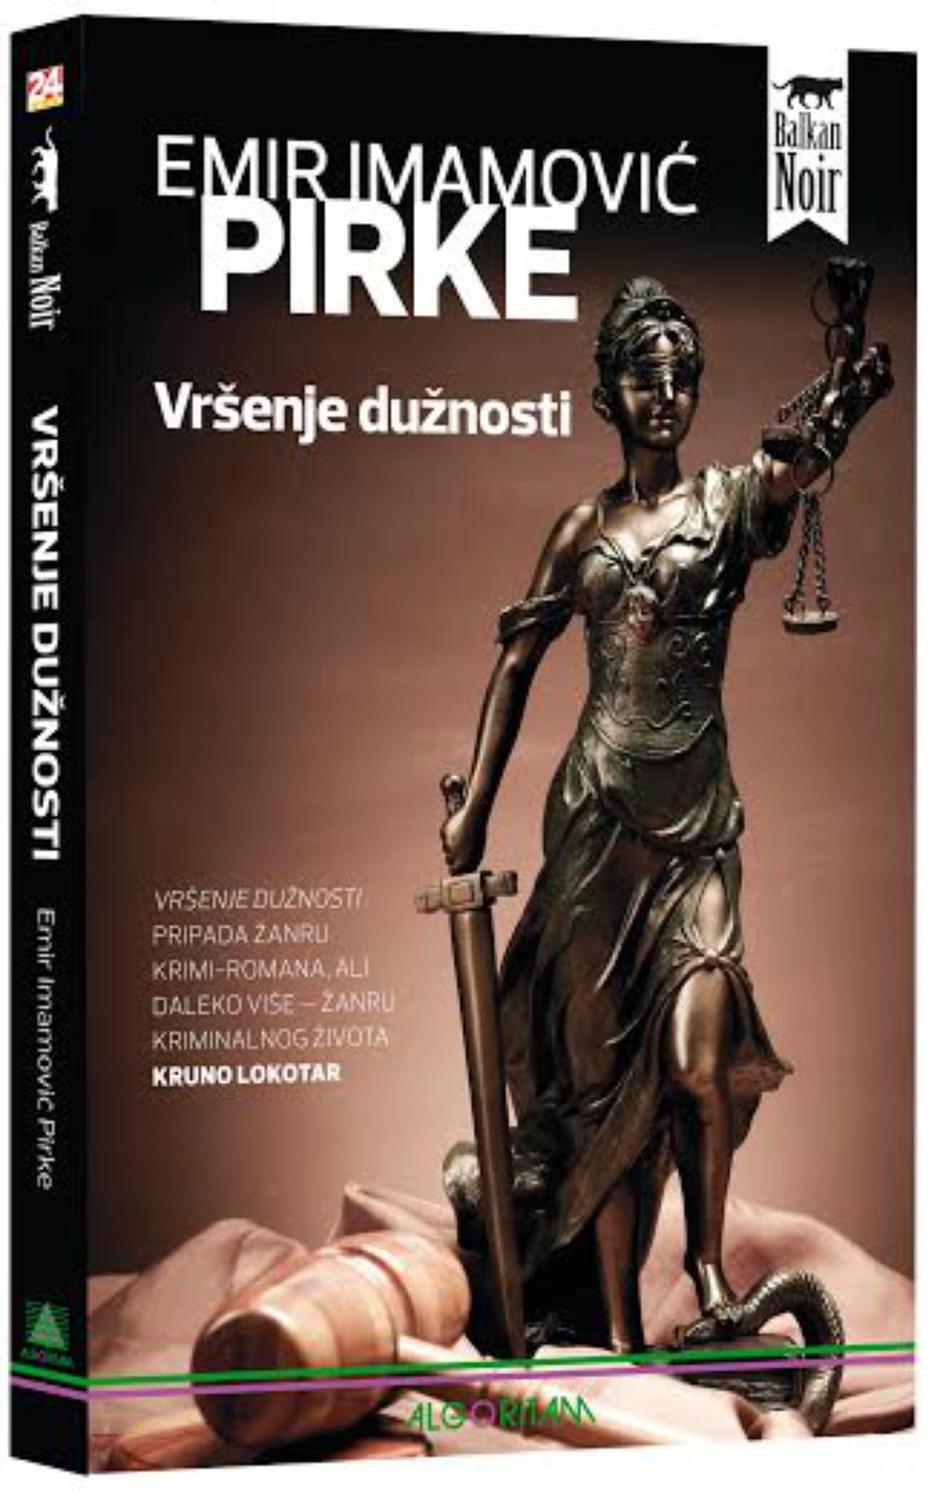 Emir Imamović Pirke "Vršenje dužnosti" | Author: express